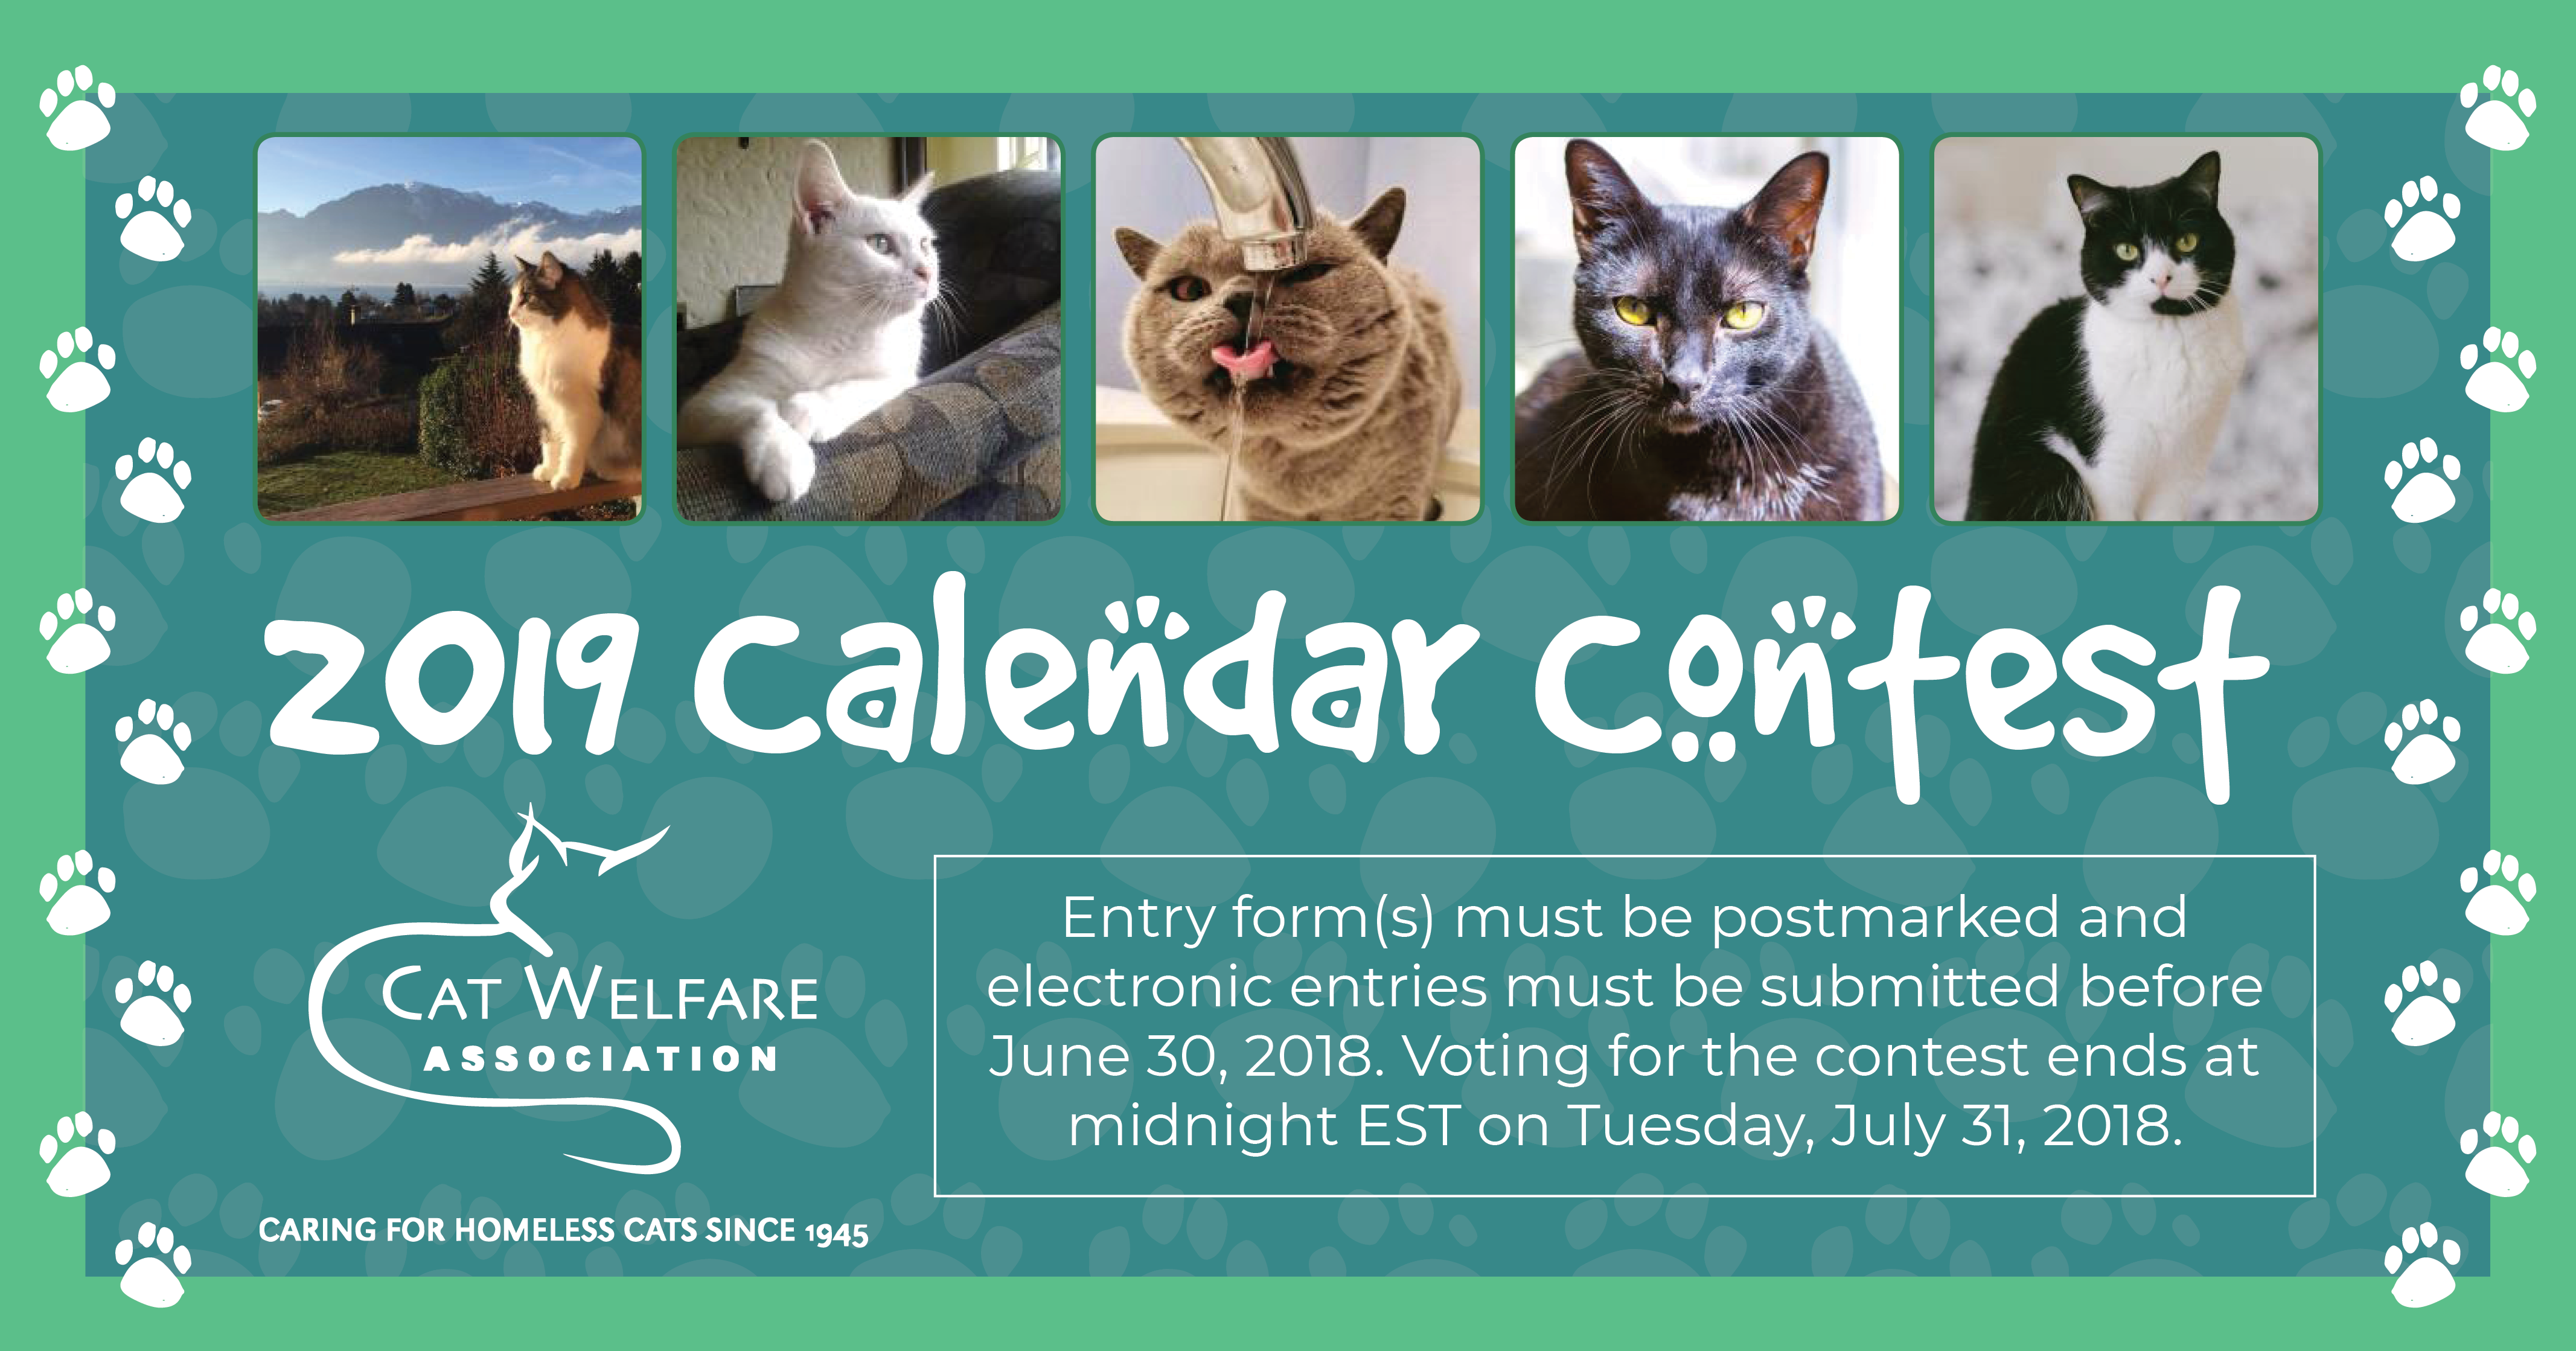 Cat Welfare 2019 Calendar Contest 360 Photo Contest